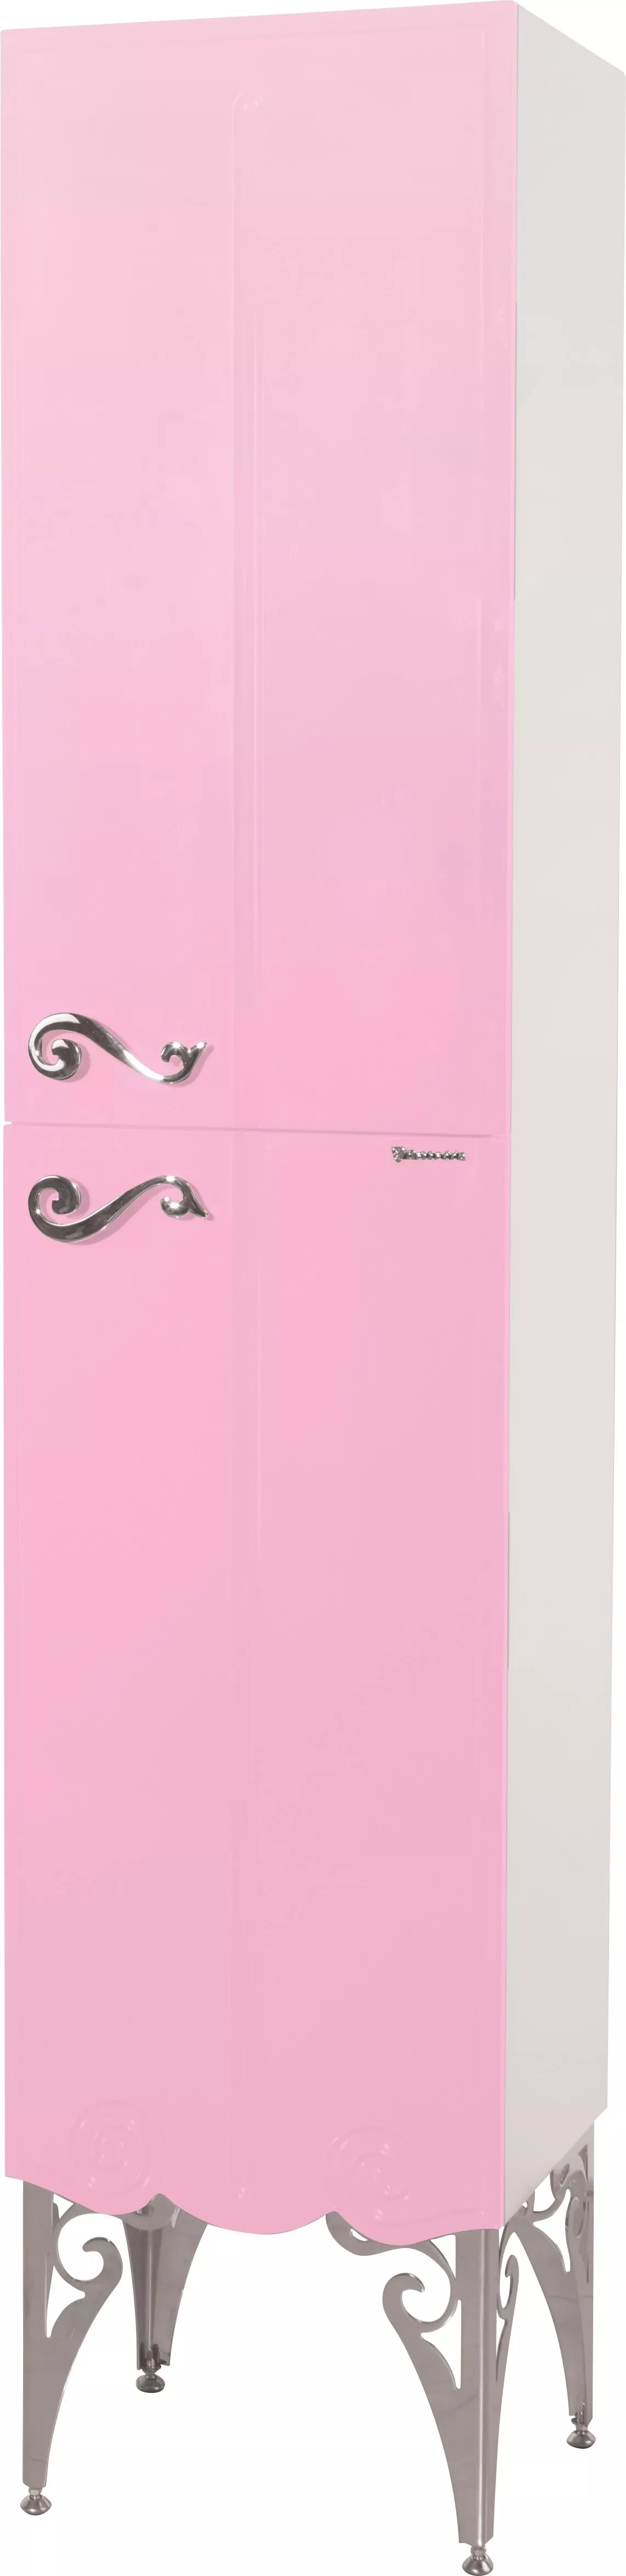 Шкаф-пенал Bellezza Эстель 40 R розовый, размер 40, цвет белый 4628305001094 - фото 1